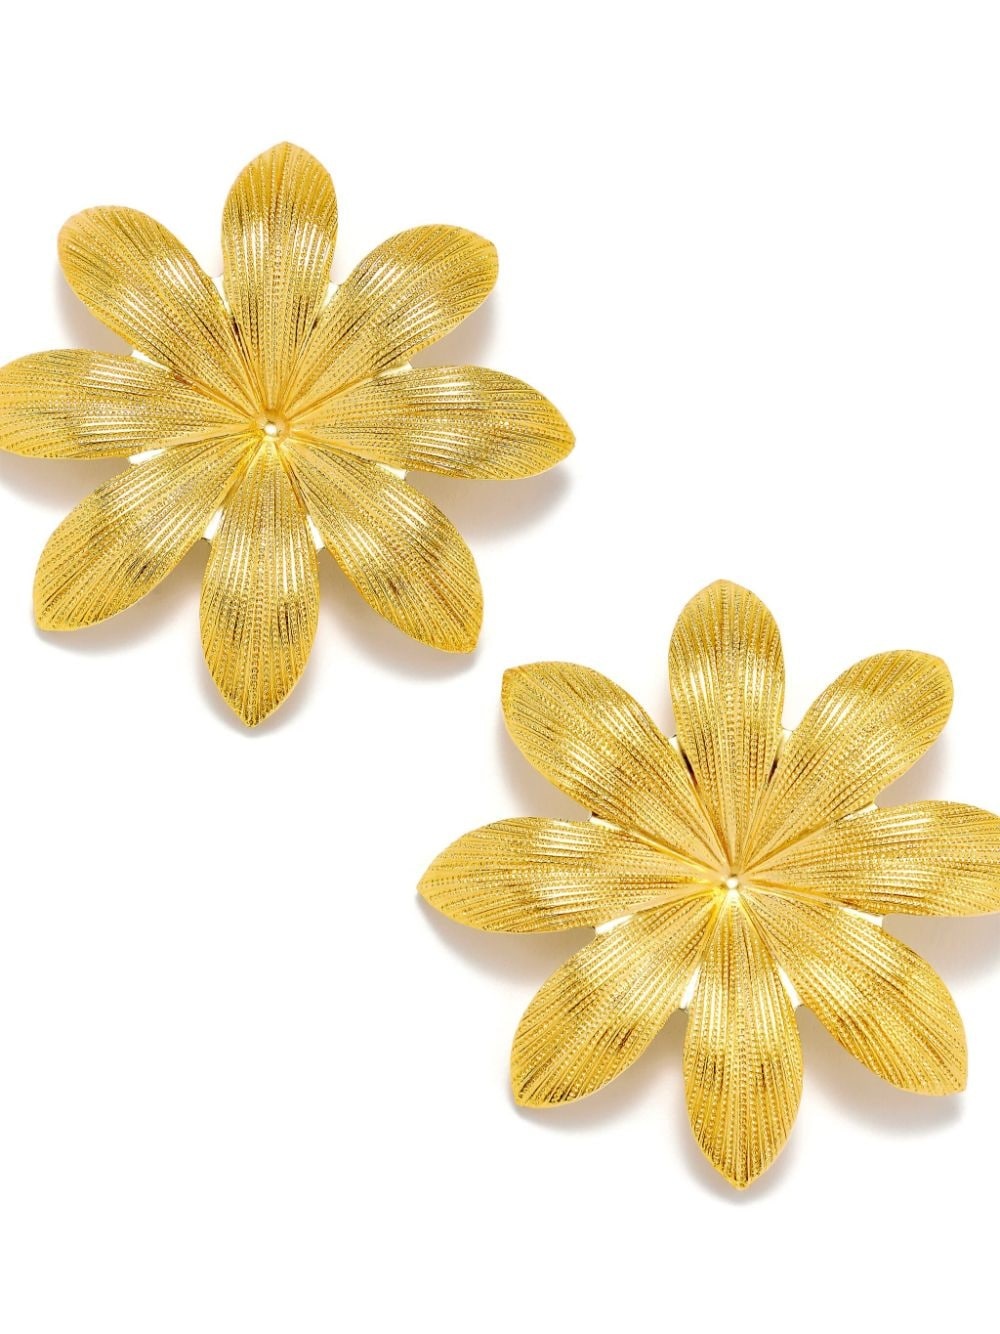 Sonia Liliun earrings - 2